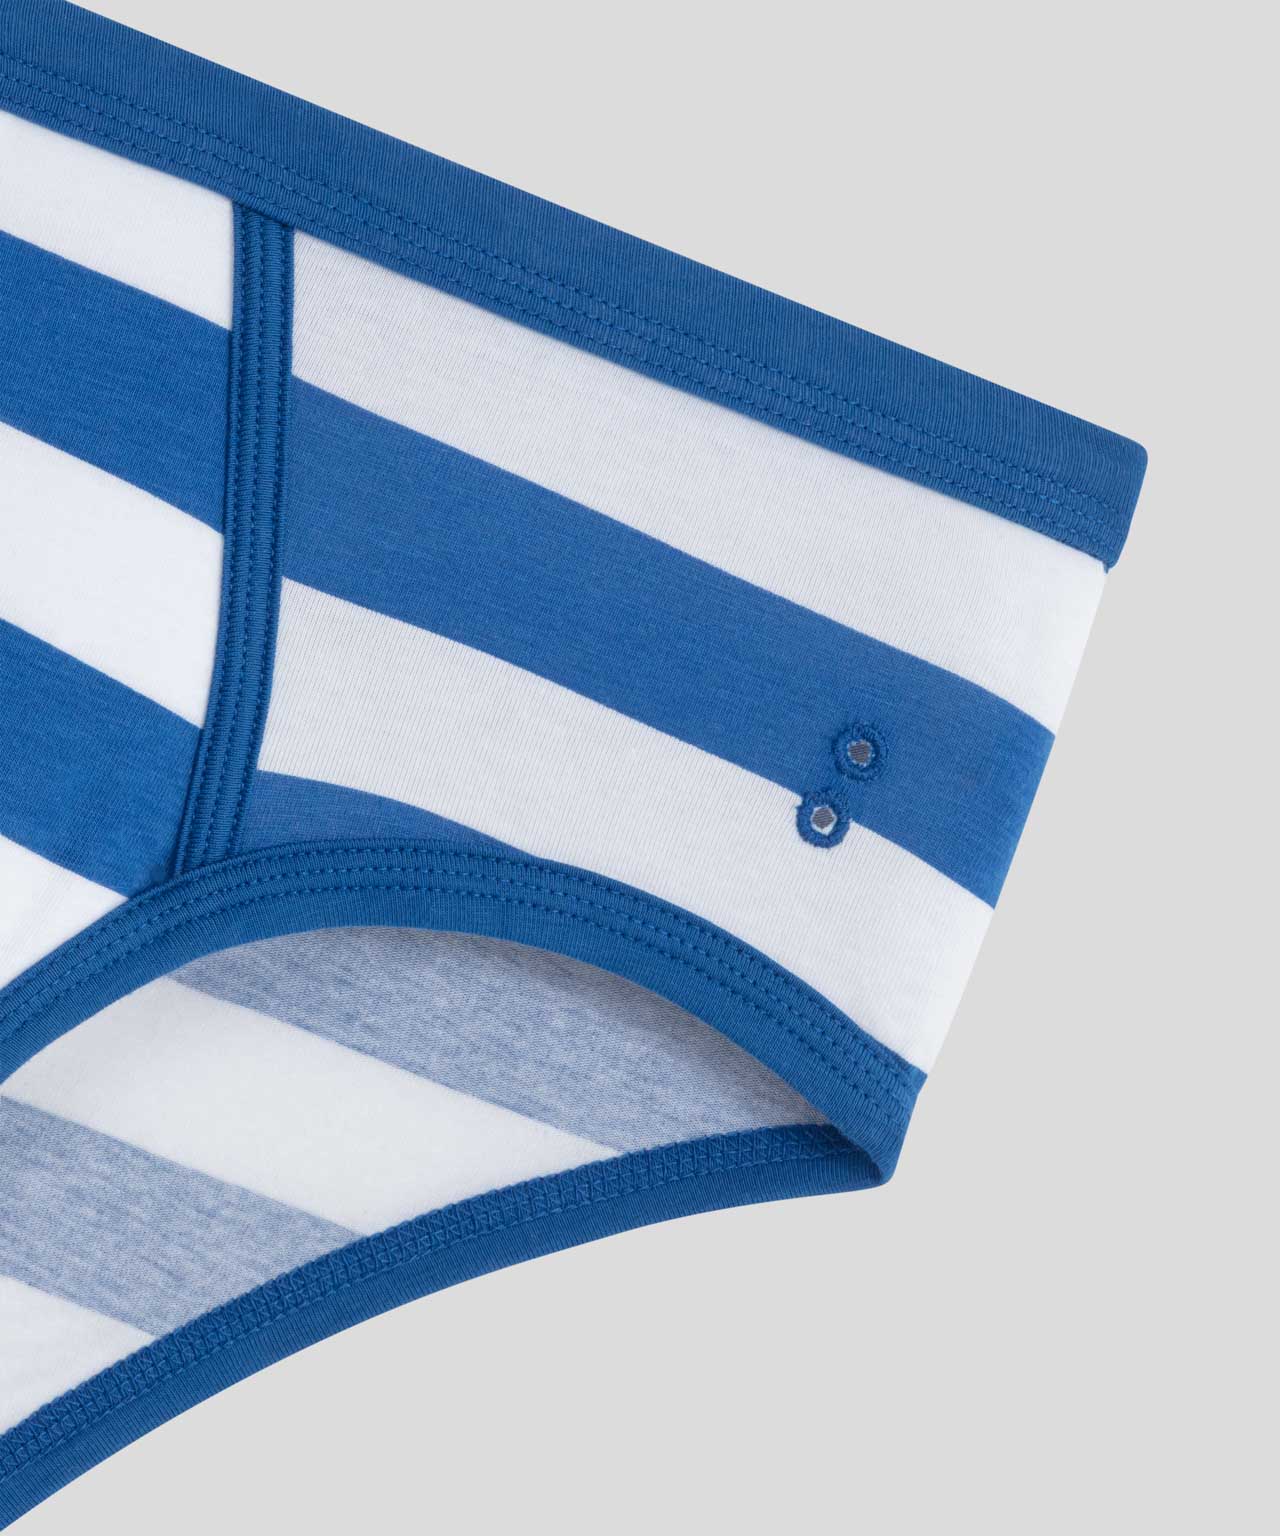 Y-Front Briefs Wide Stripes: Greek Blue/White